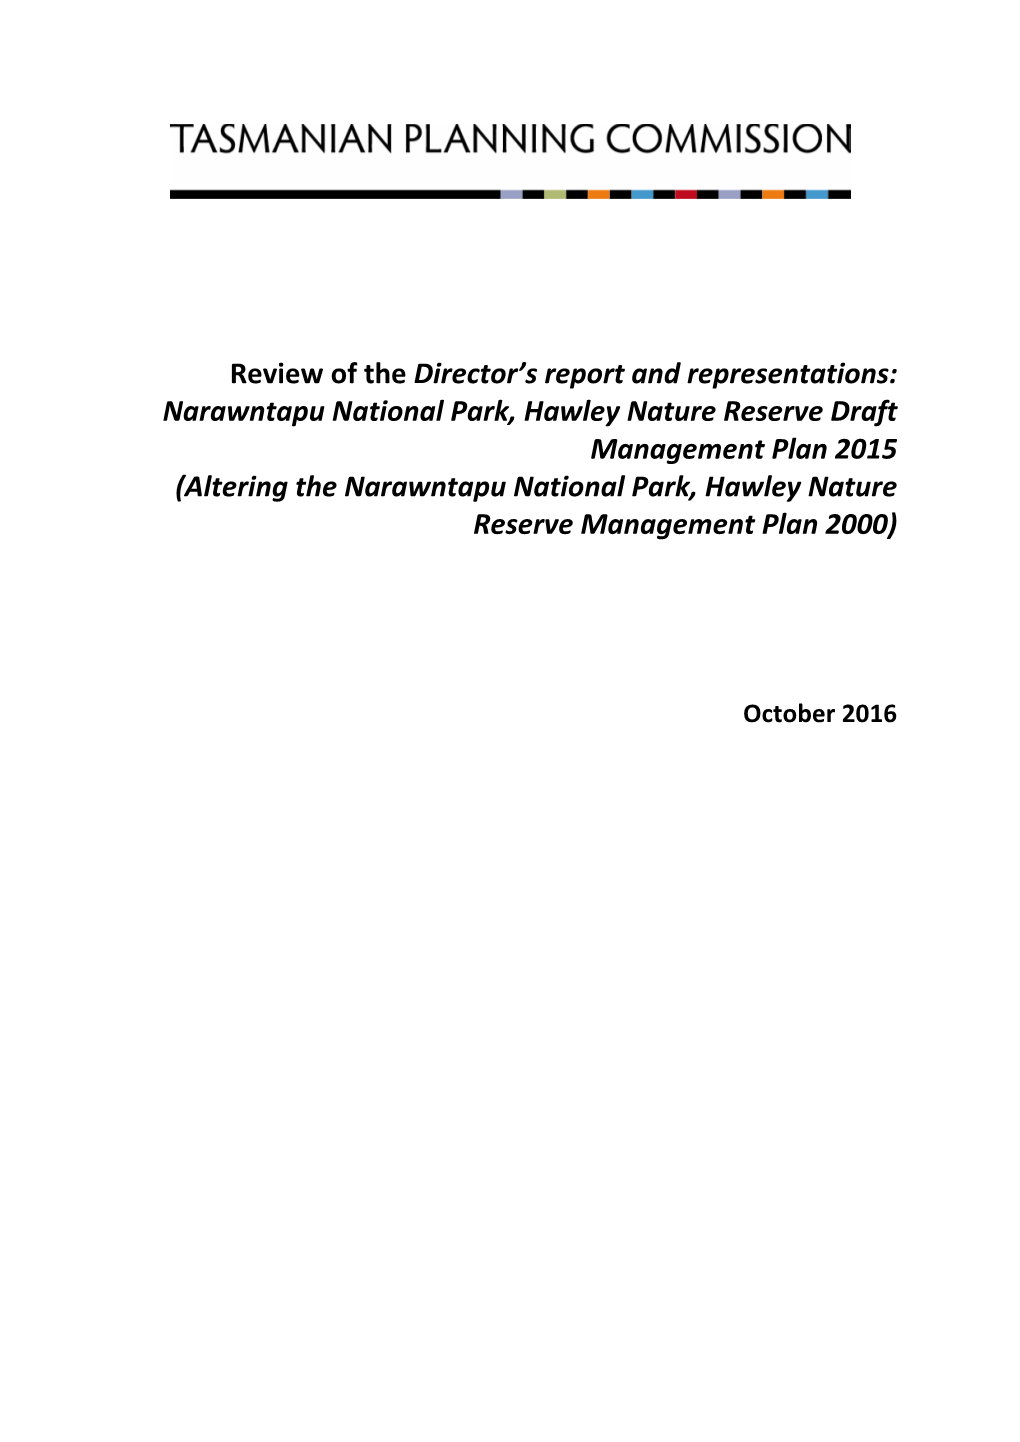 Narawntapu National Park, Hawley Nature Reserve Draft Management Plan 2015 (Altering the Narawntapu National Park, Hawley Nature Reserve Management Plan 2000)